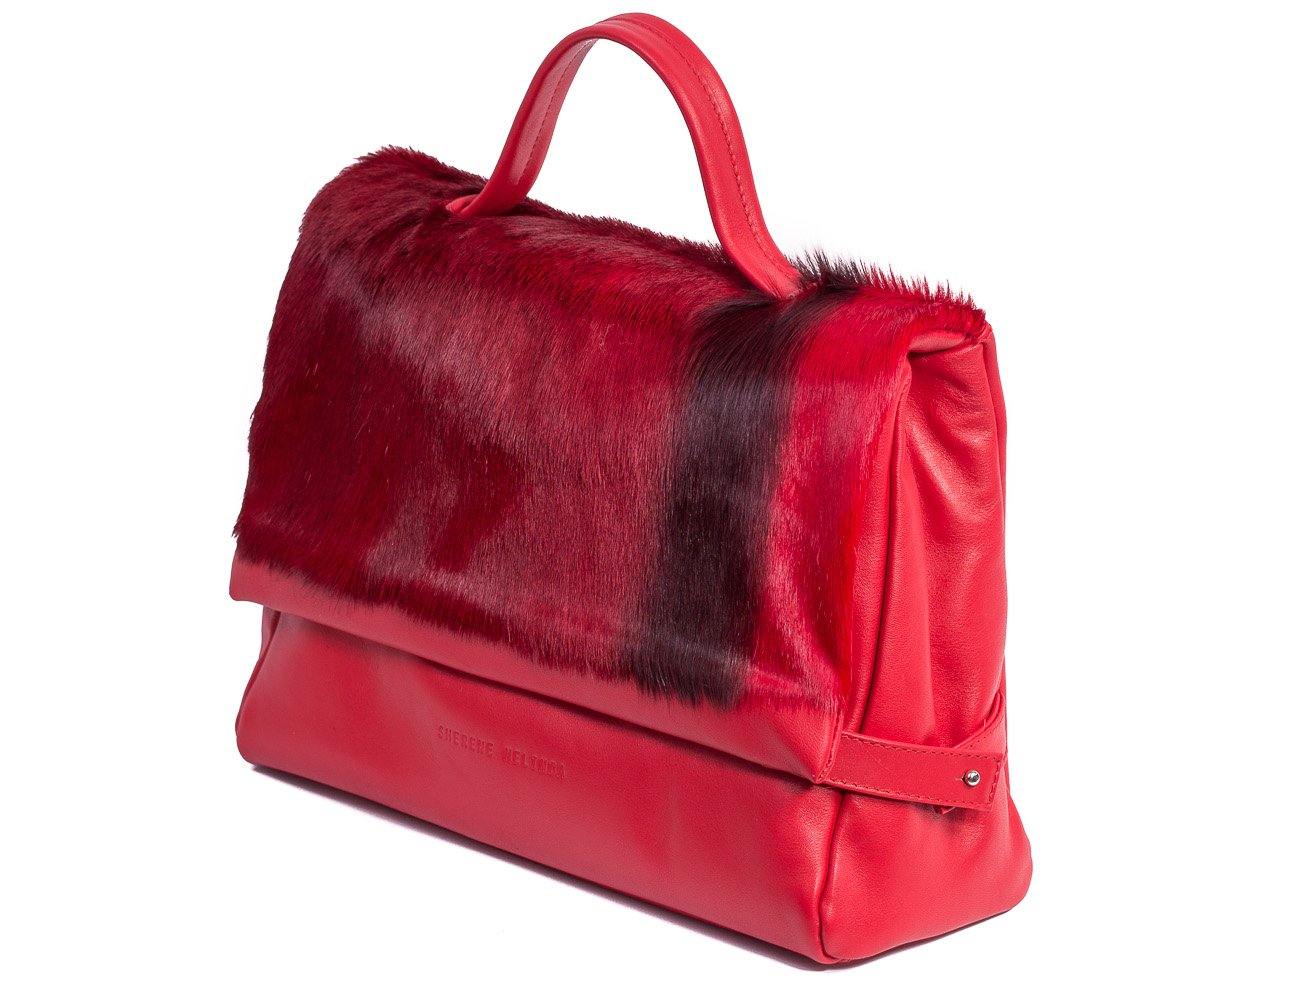 sherene melinda springbok hair-on-hide red leather smith tote bag Stripe side angle